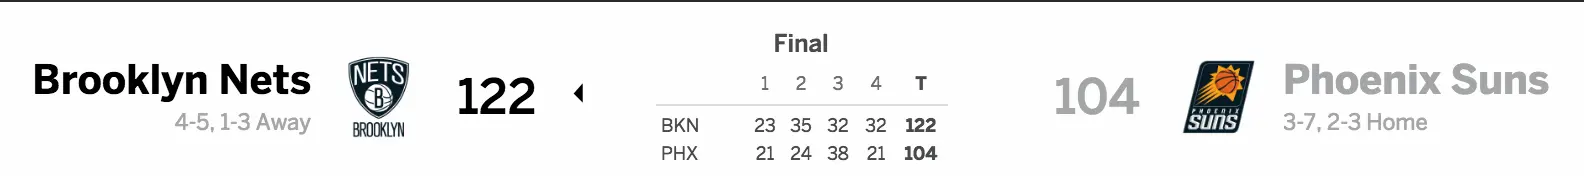 Brooklyn Nets vs. Phoenix Suns 11/12/16 Score